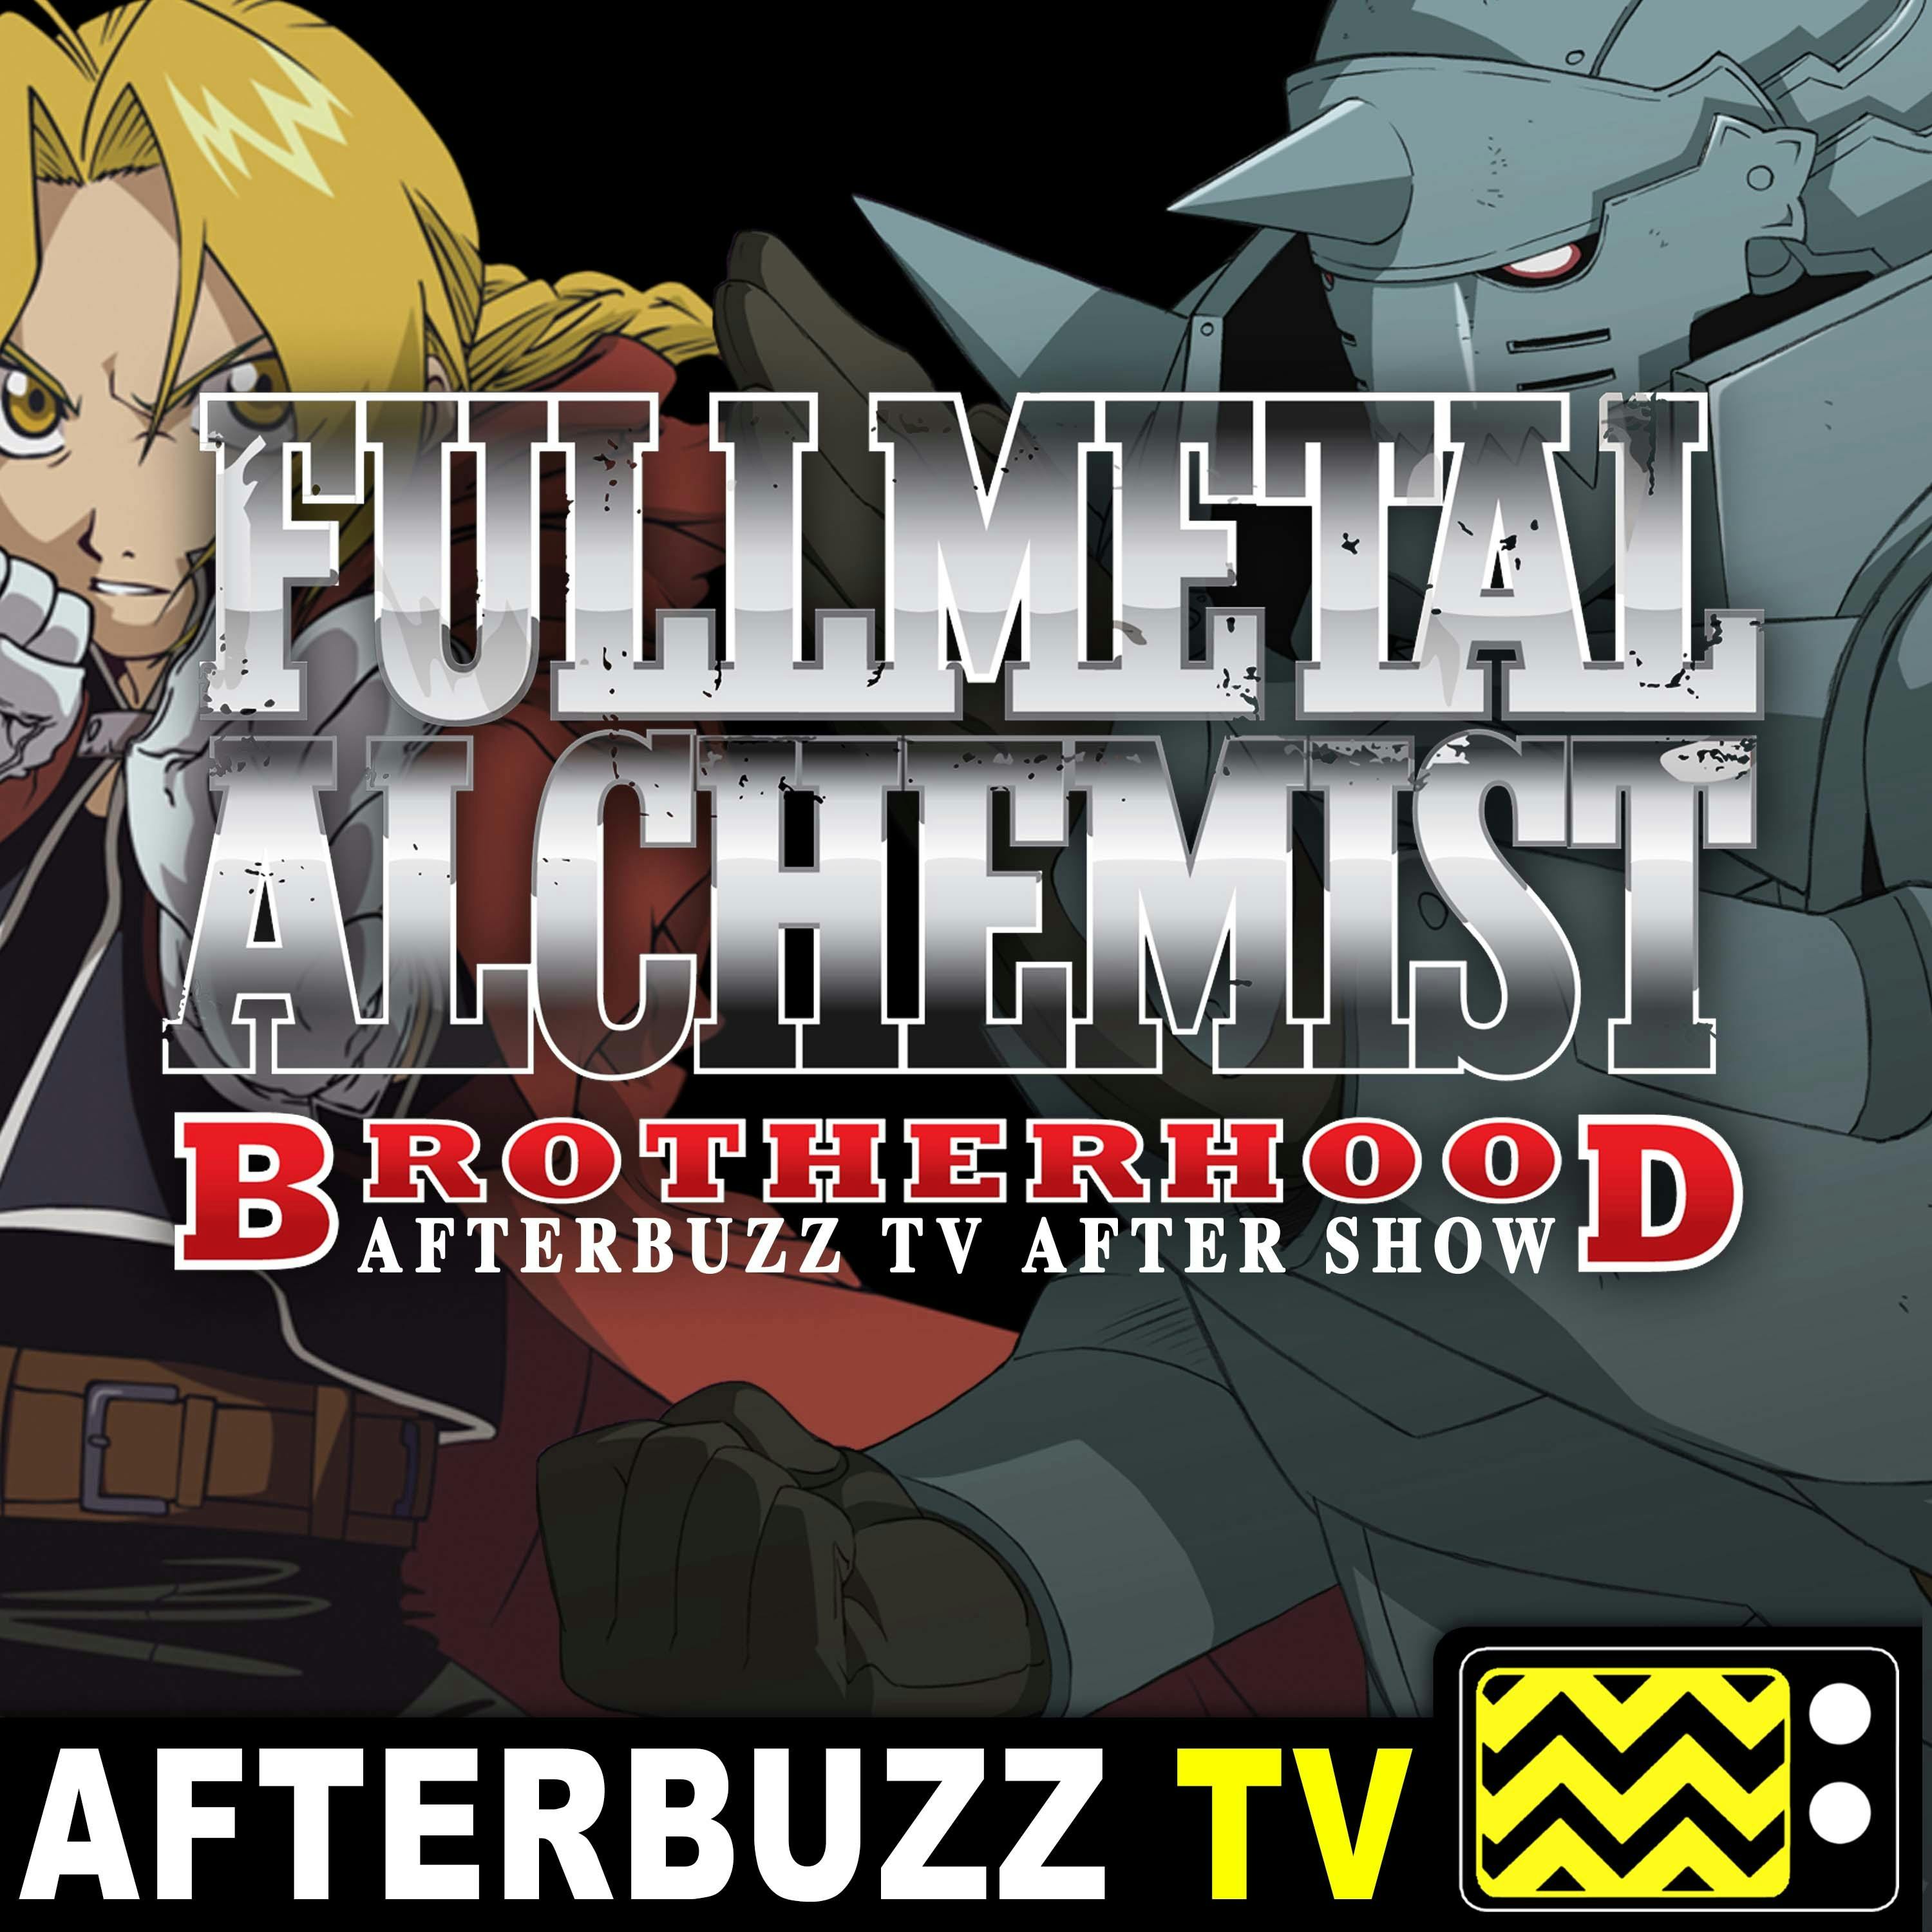 Fullmetal Alchemist: Brotherhood S:1 | Episodes 1 -4 | AfterBuzz TV AfterShow